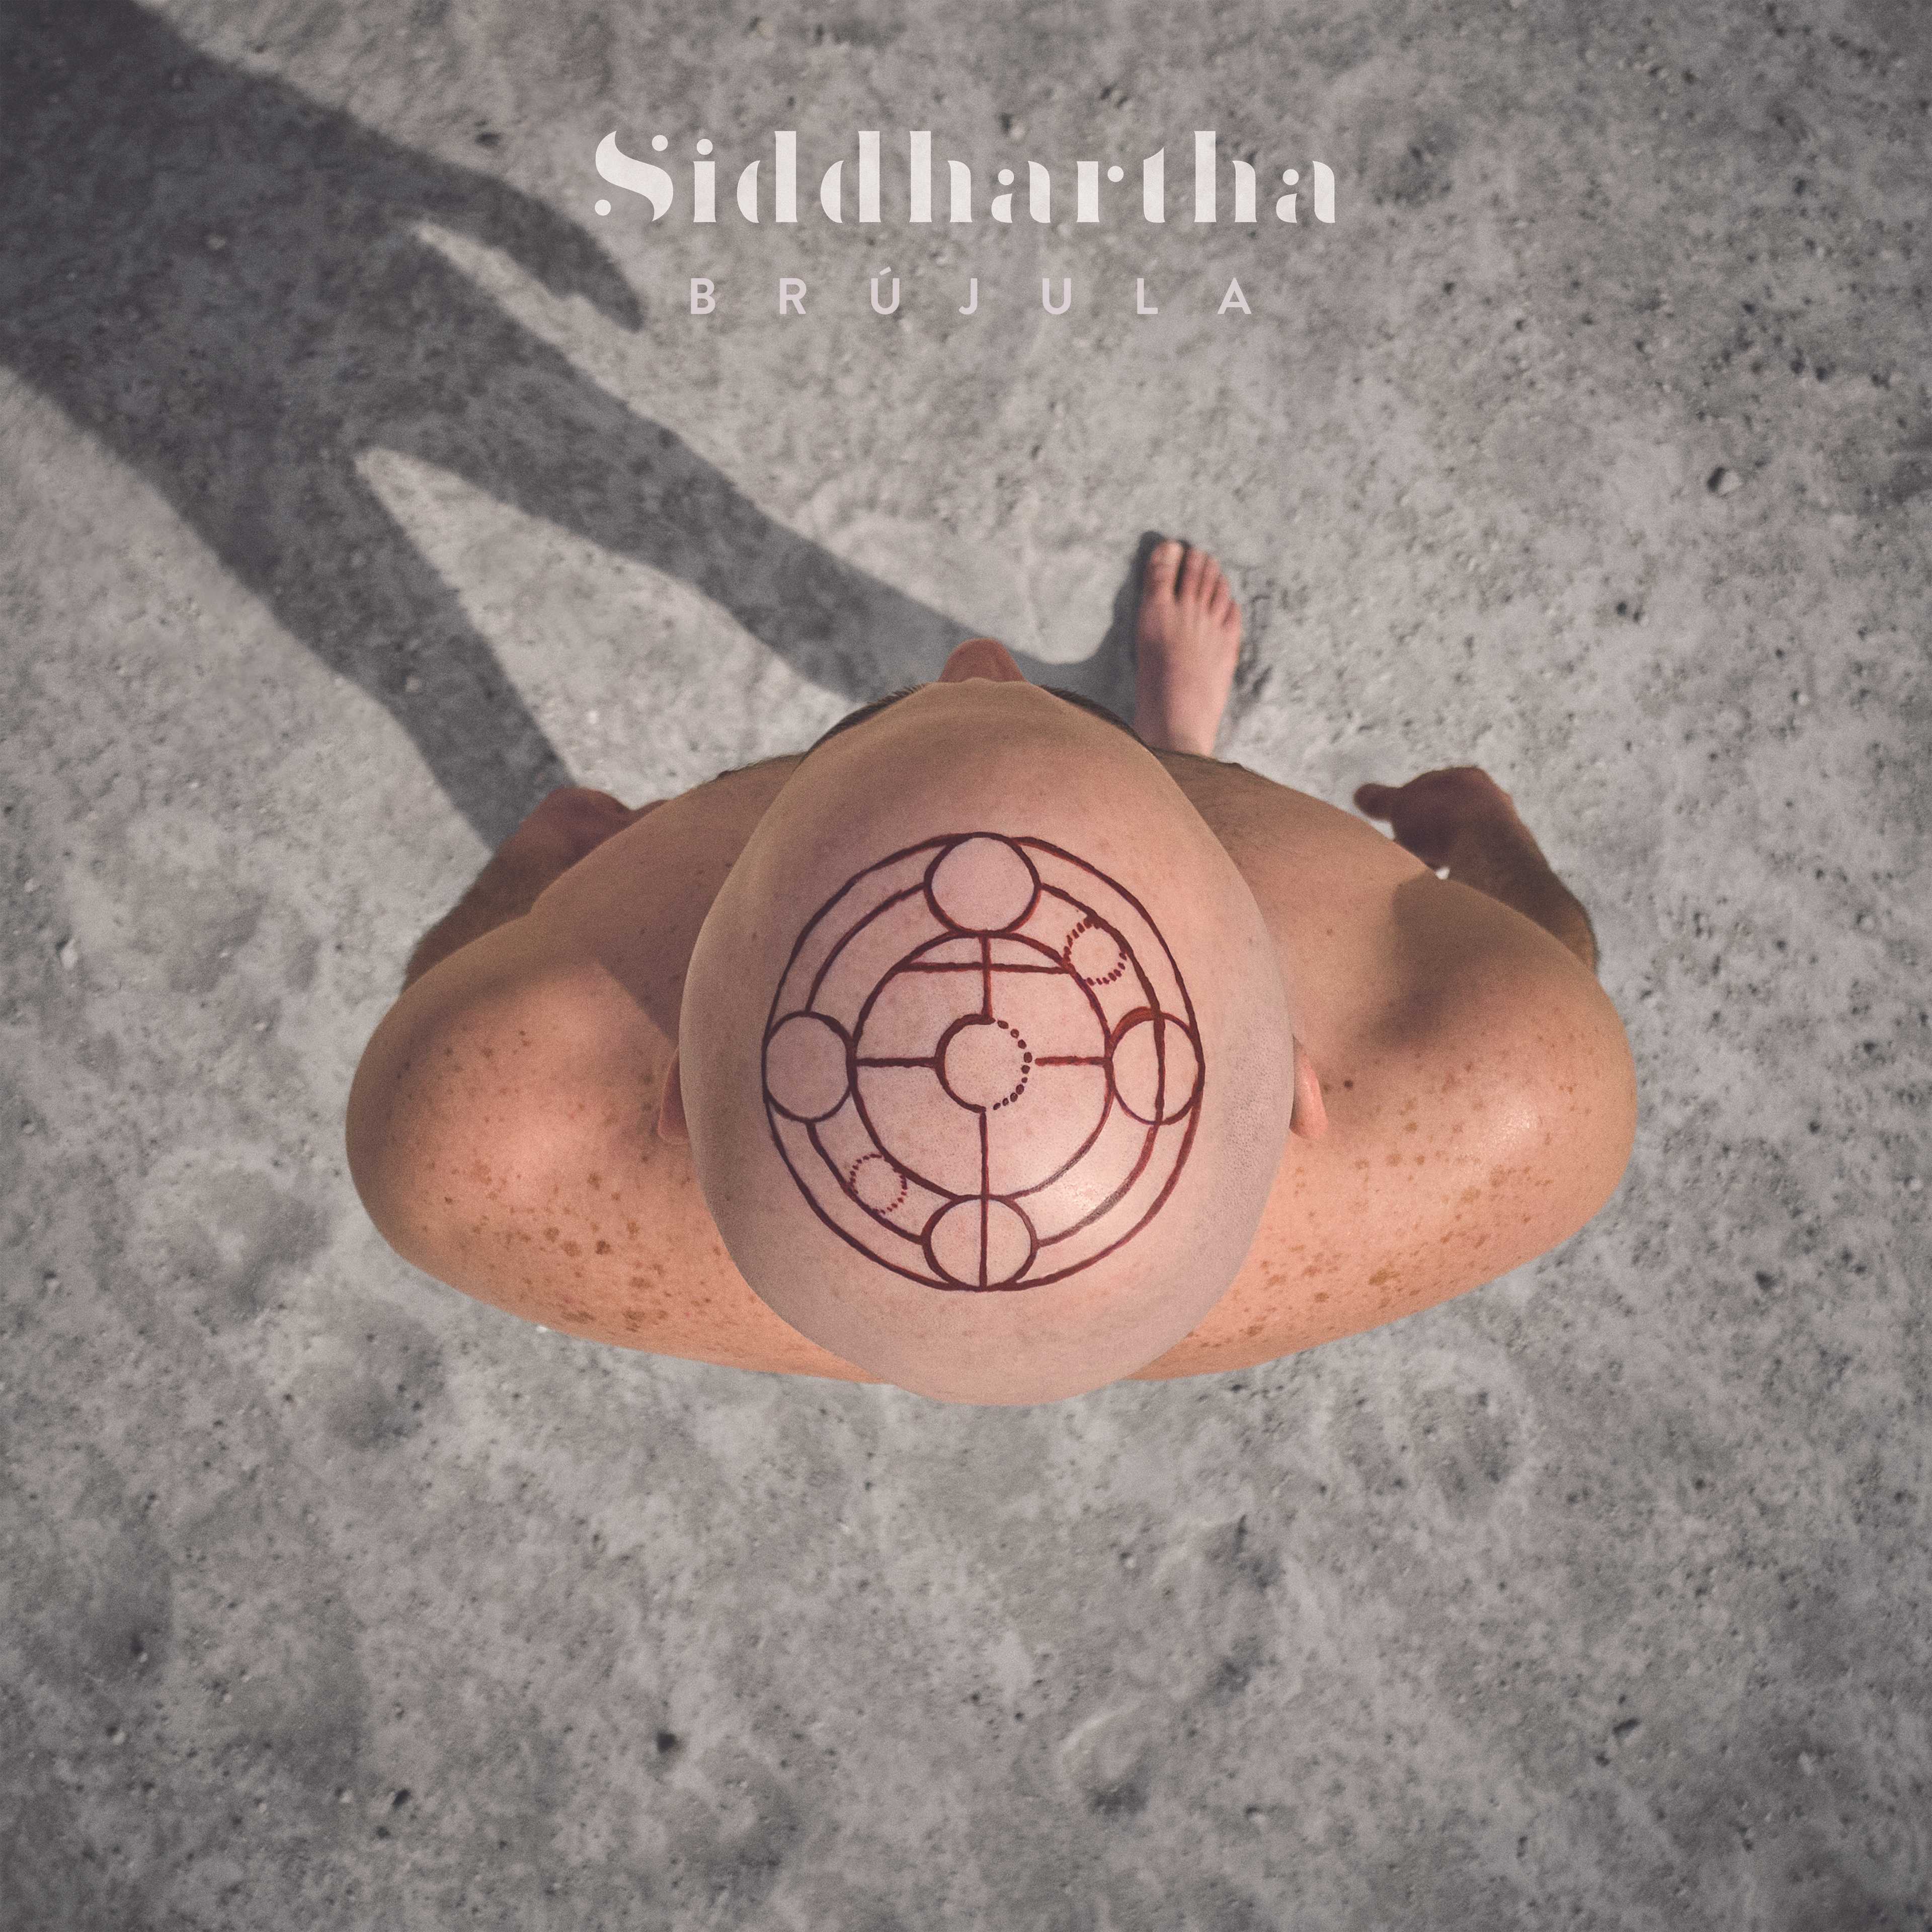 Brújula | Siddhartha (Mixer Edition)